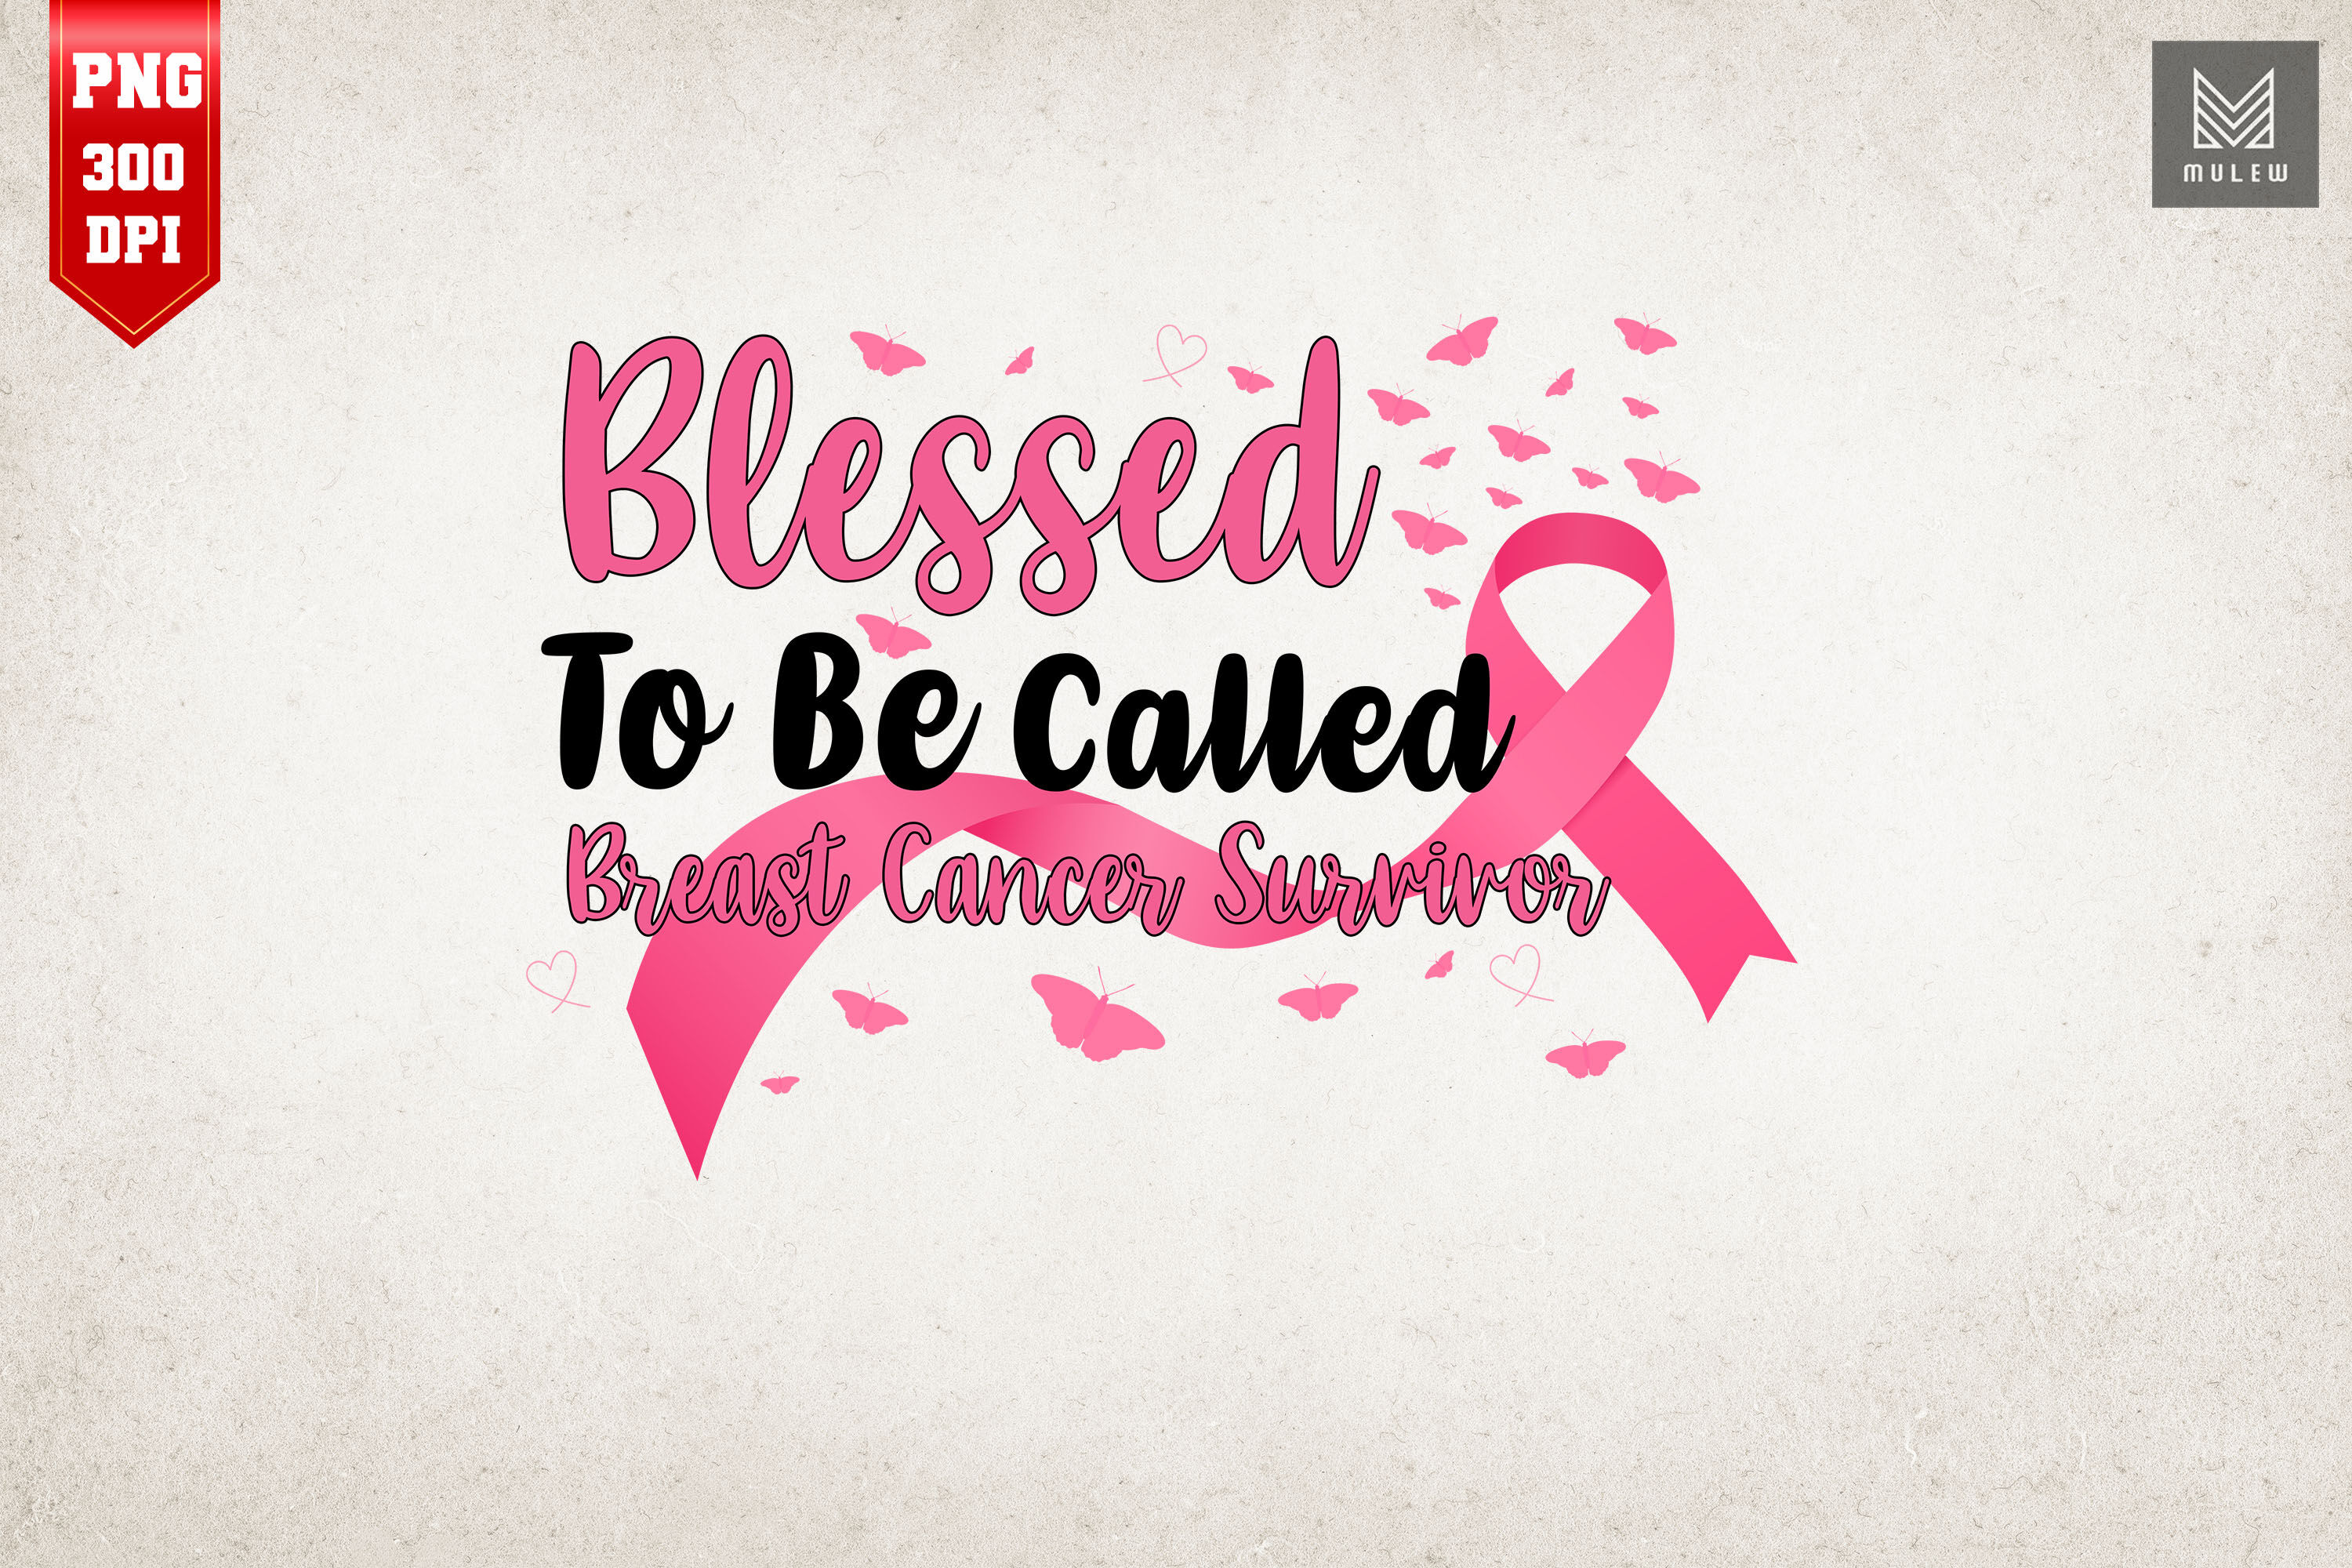 Pink Ribbons Breast Cancer Awareness Clip Art 20 Png Files